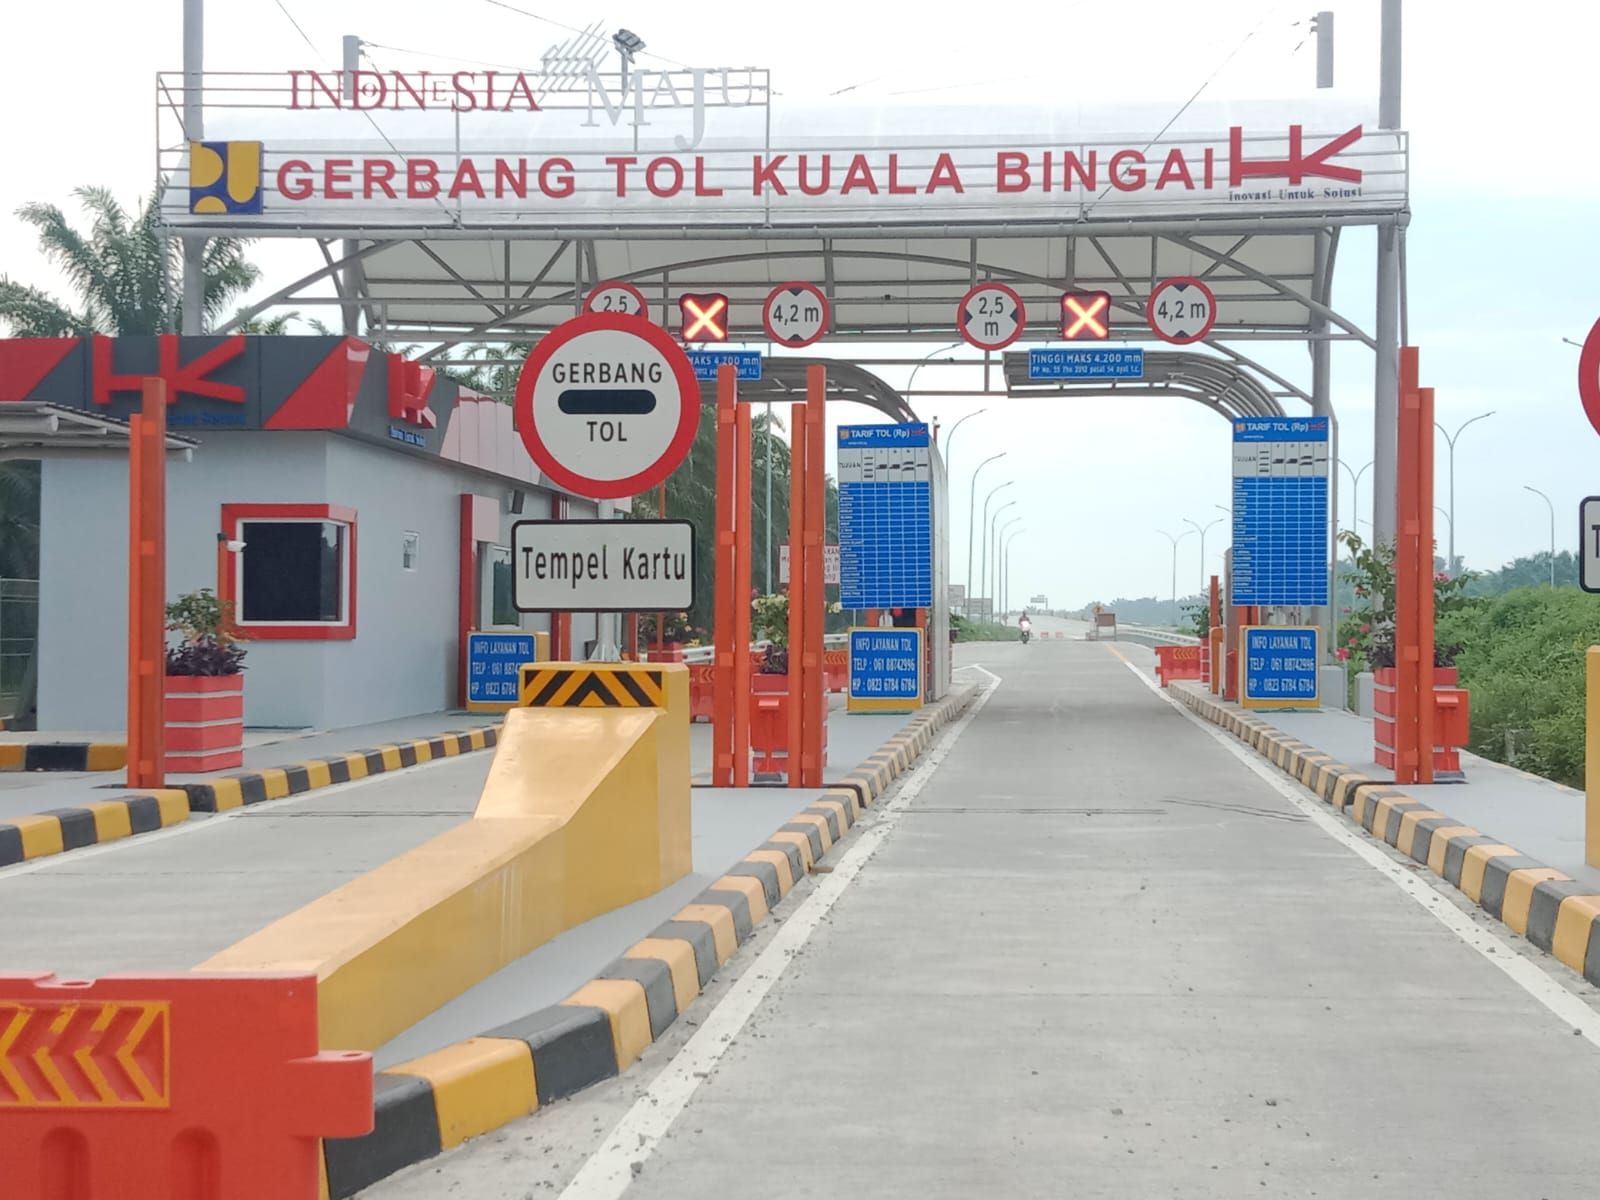 Tol Kuala Bingai